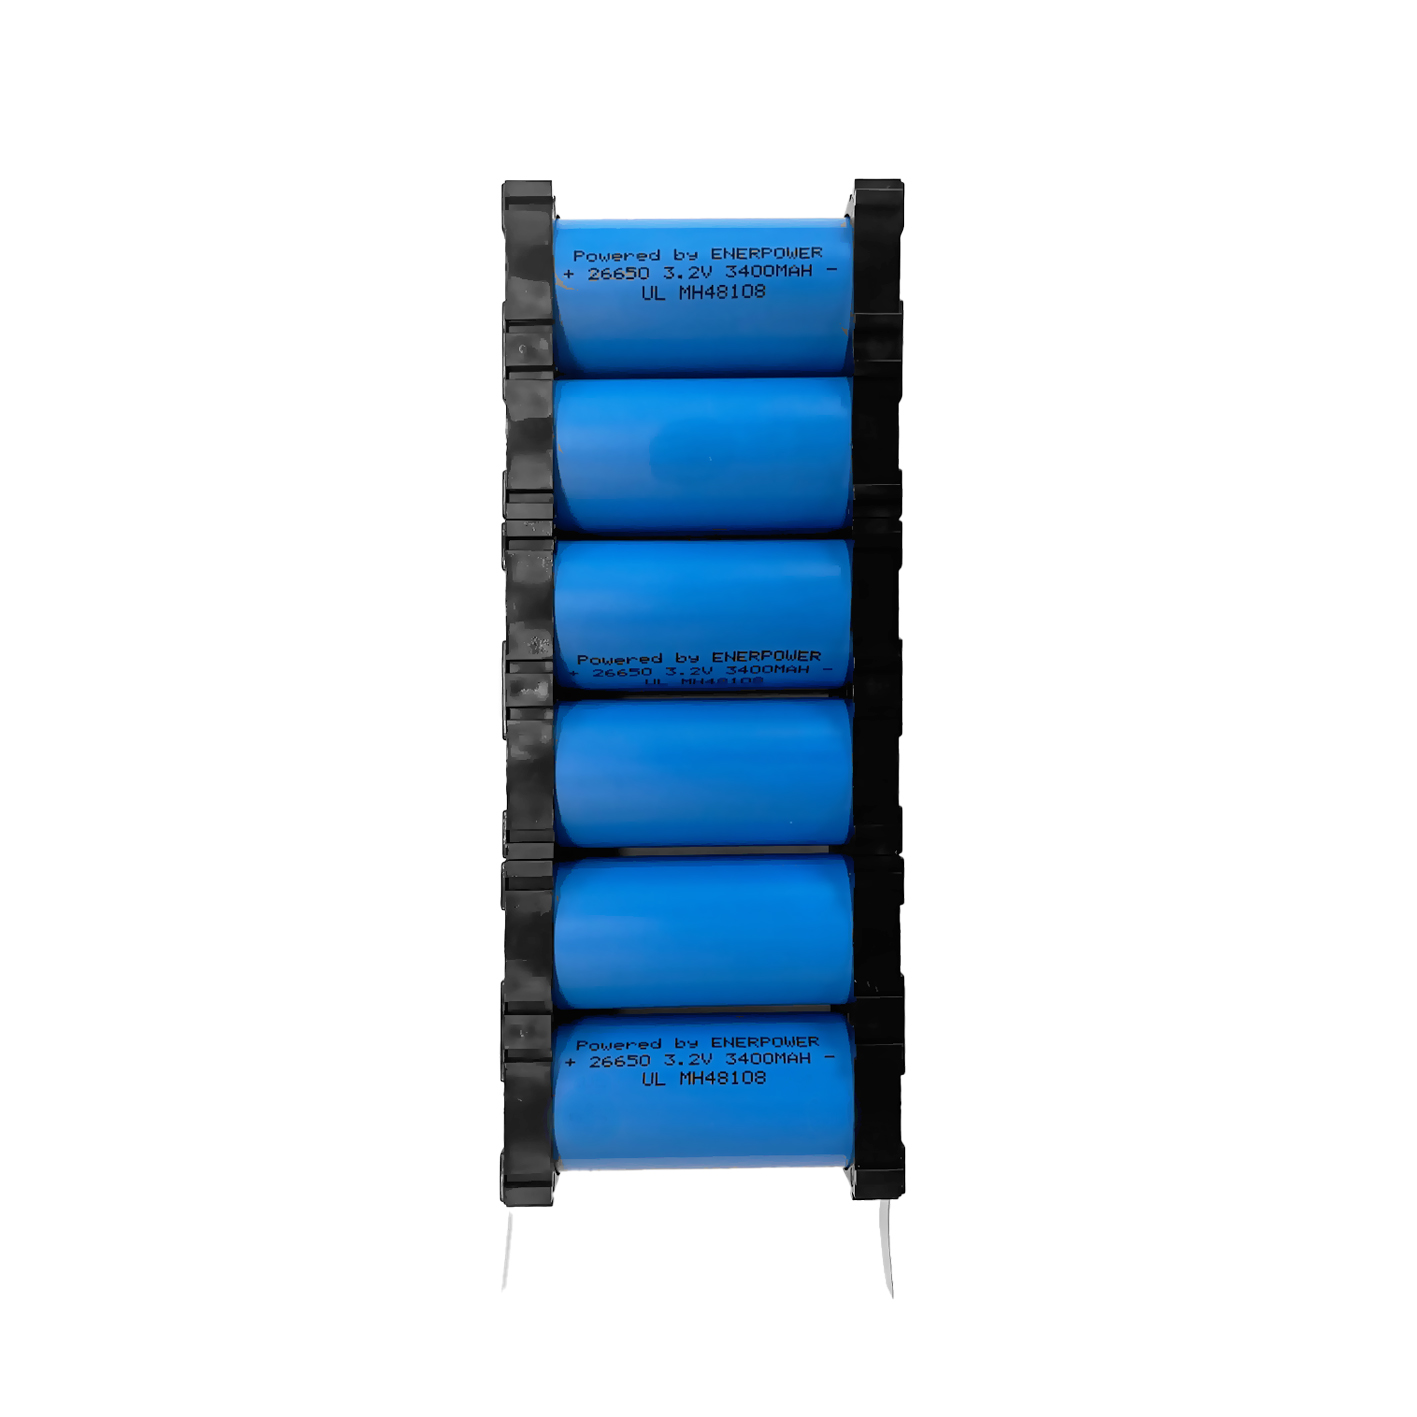 Enerpower battery module 1S6P 3.2V 20.40Ah (65.30Wh) 165 x 65 x 30 mm 